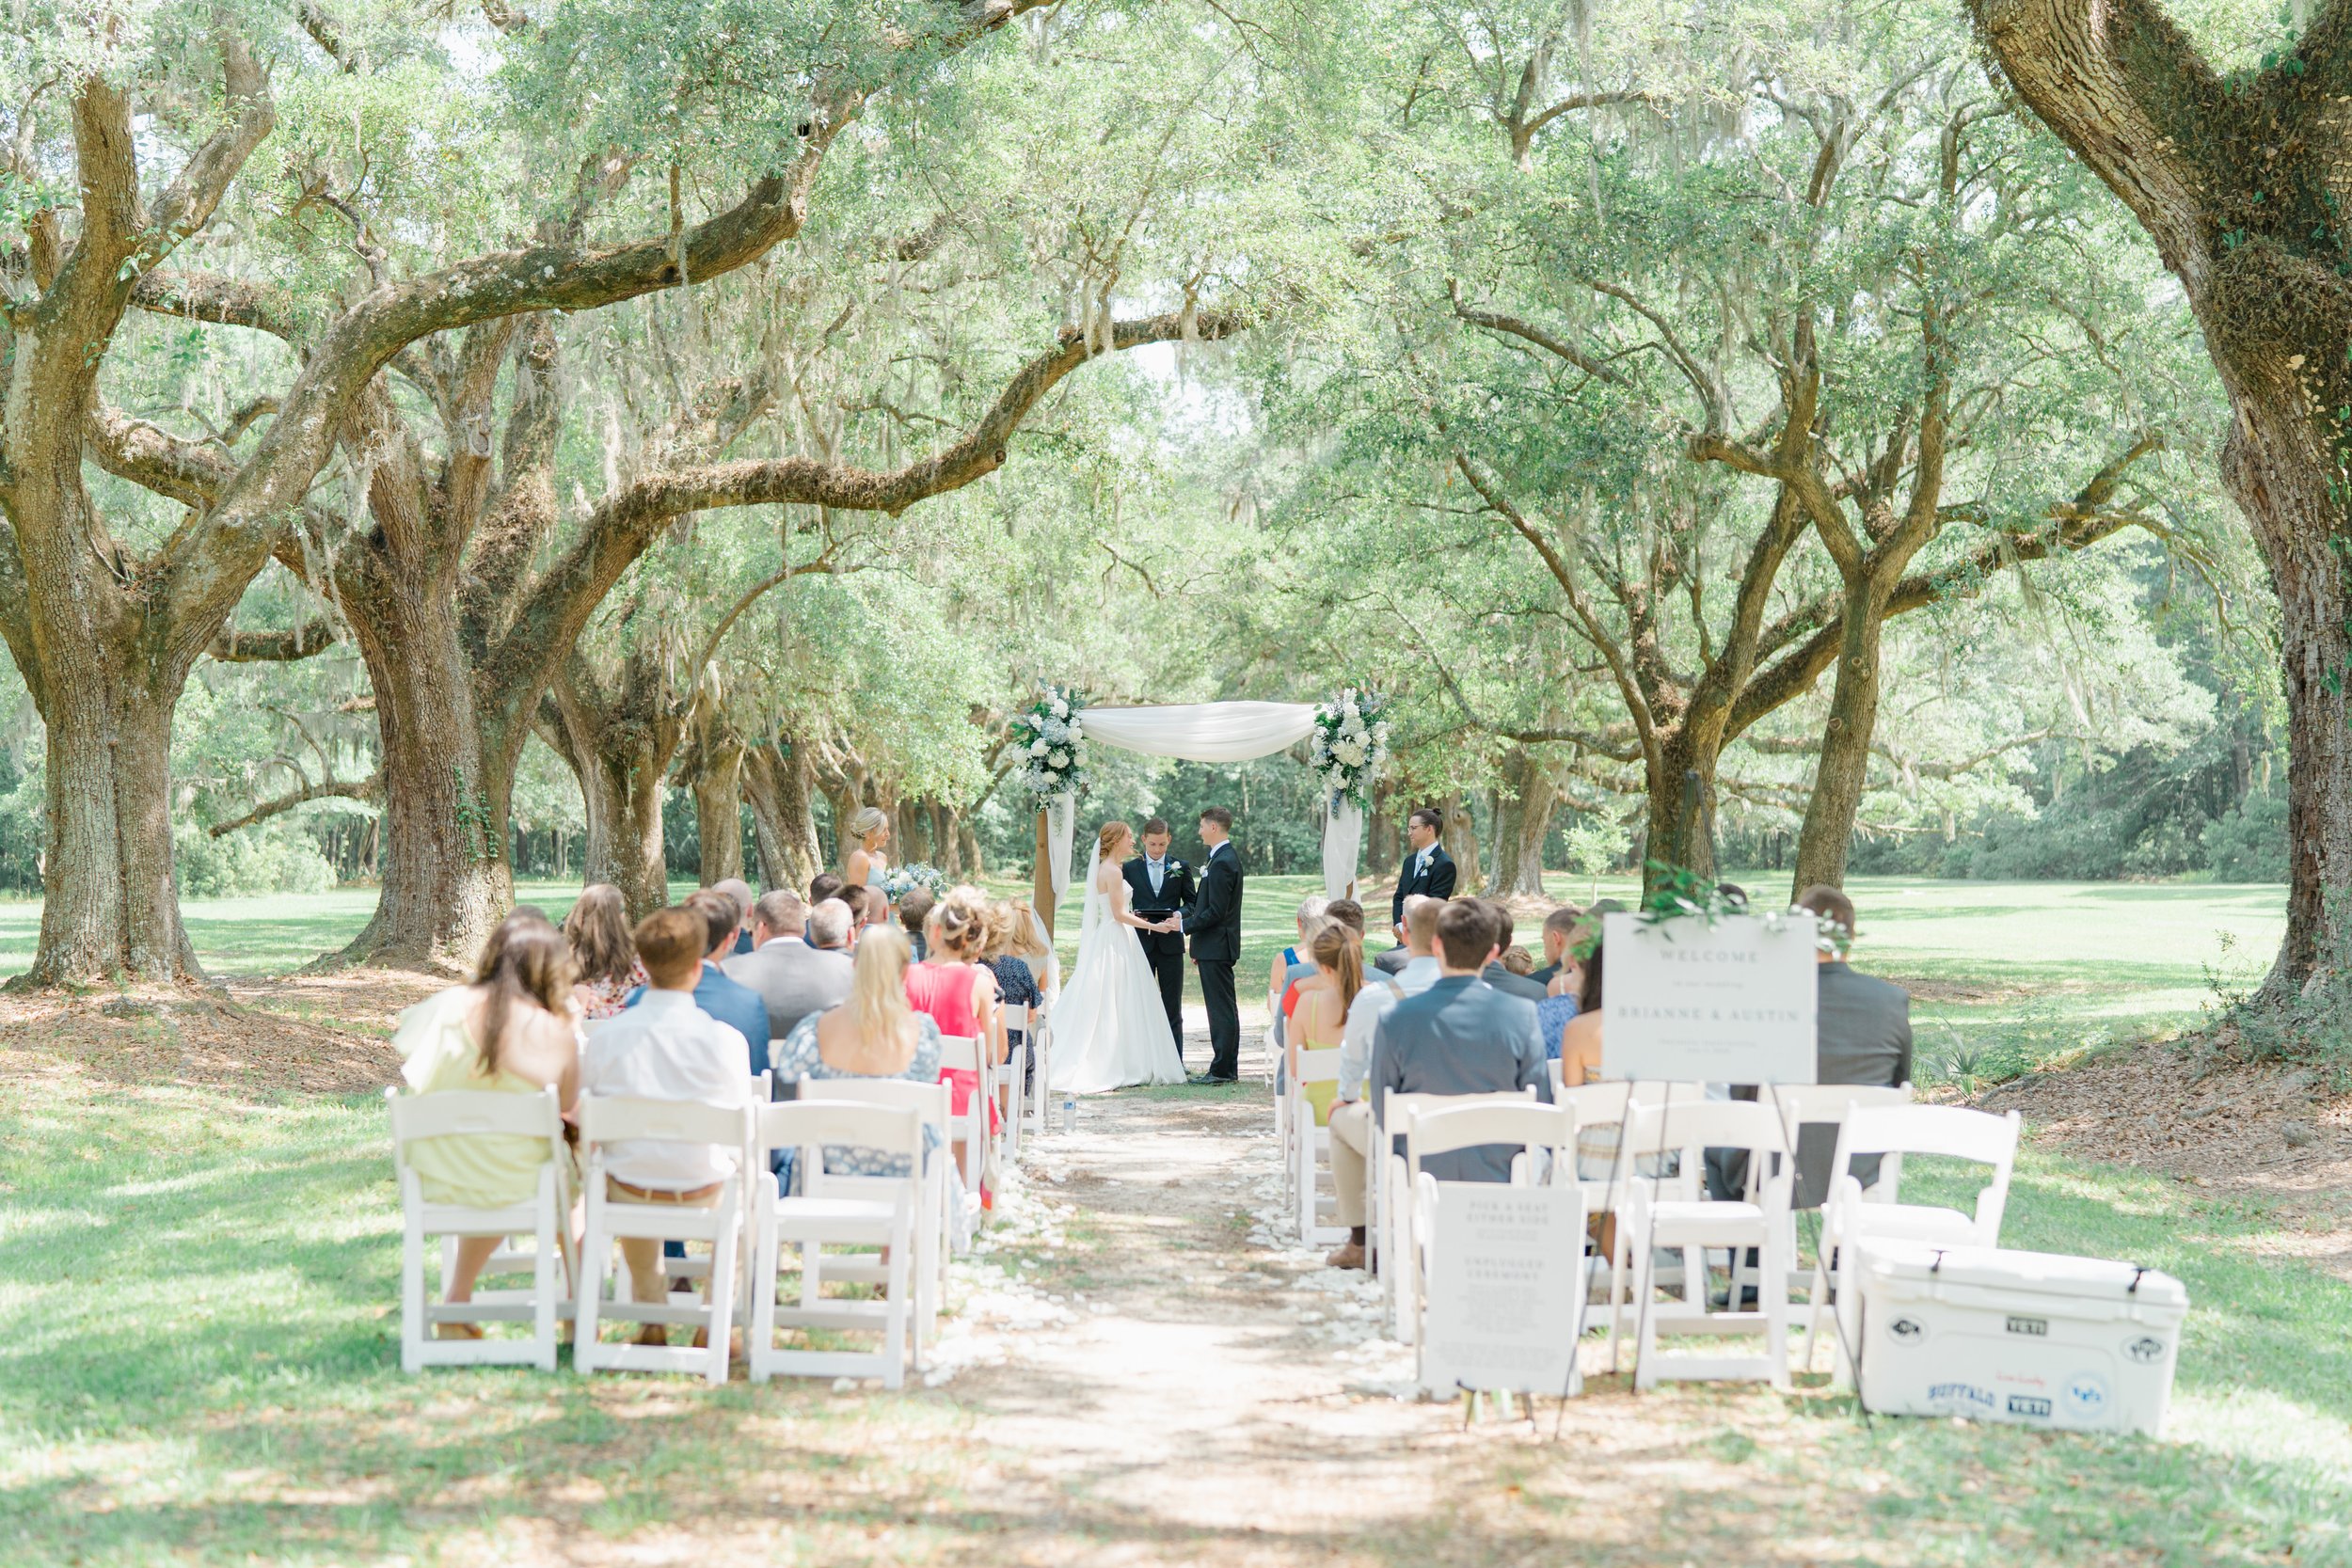 mount pleasant outdoor wedding ceremony. charleston destination wedding. Live oak trees.